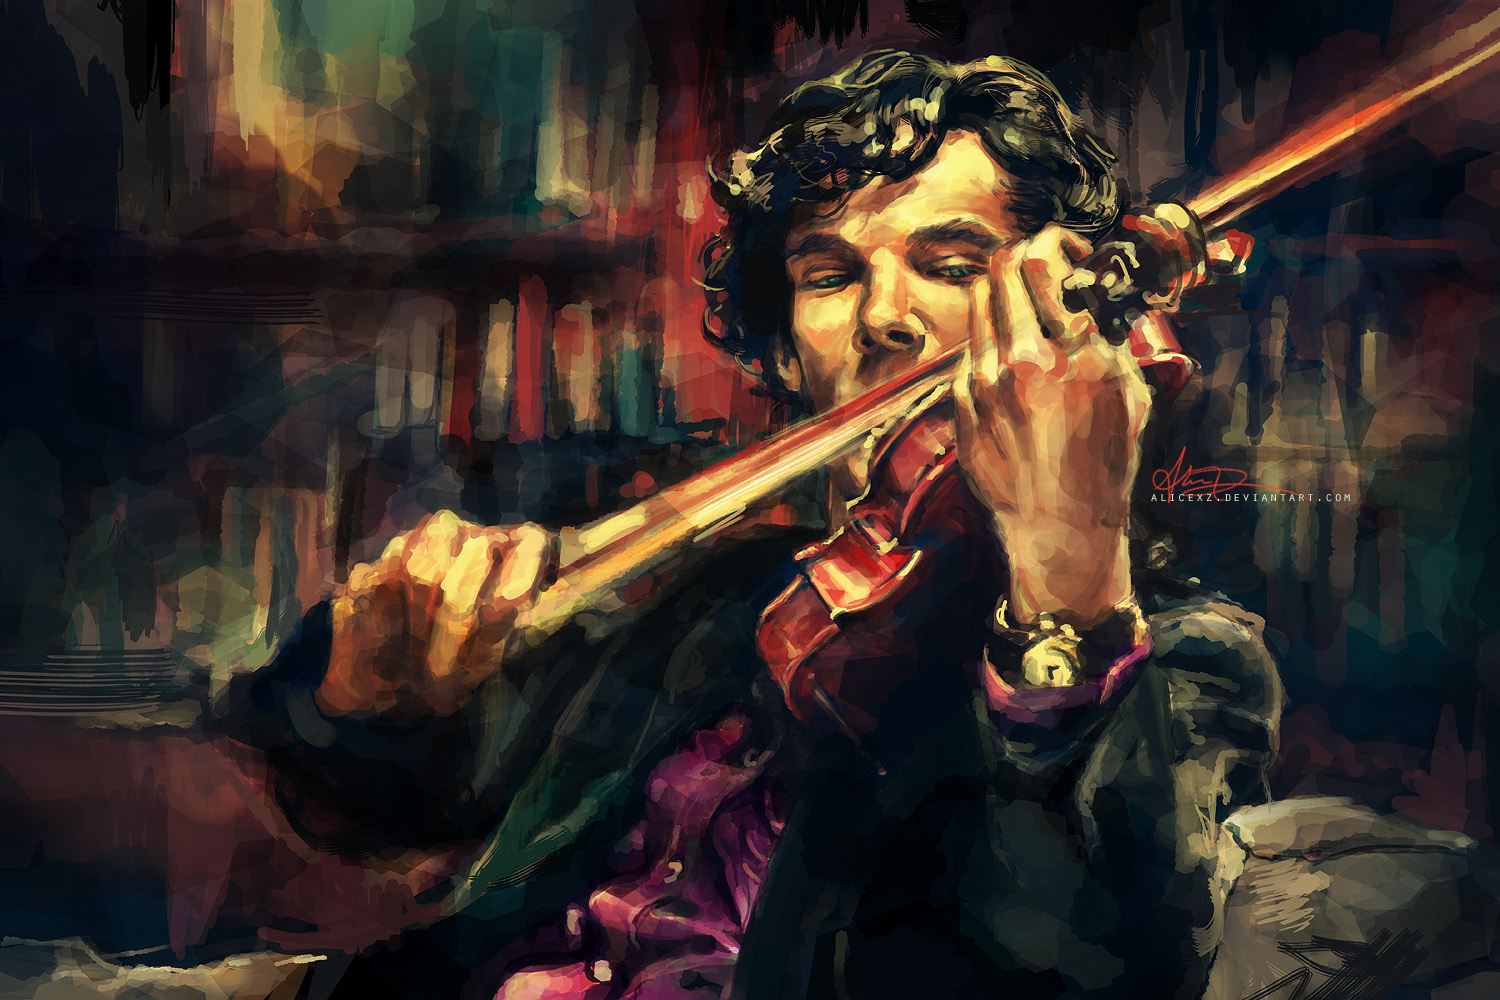 http://images5.fanpop.com/image/photos/25900000/Sherlock-sherlock-on-bbc-one-25900650-1500-1000.jpg